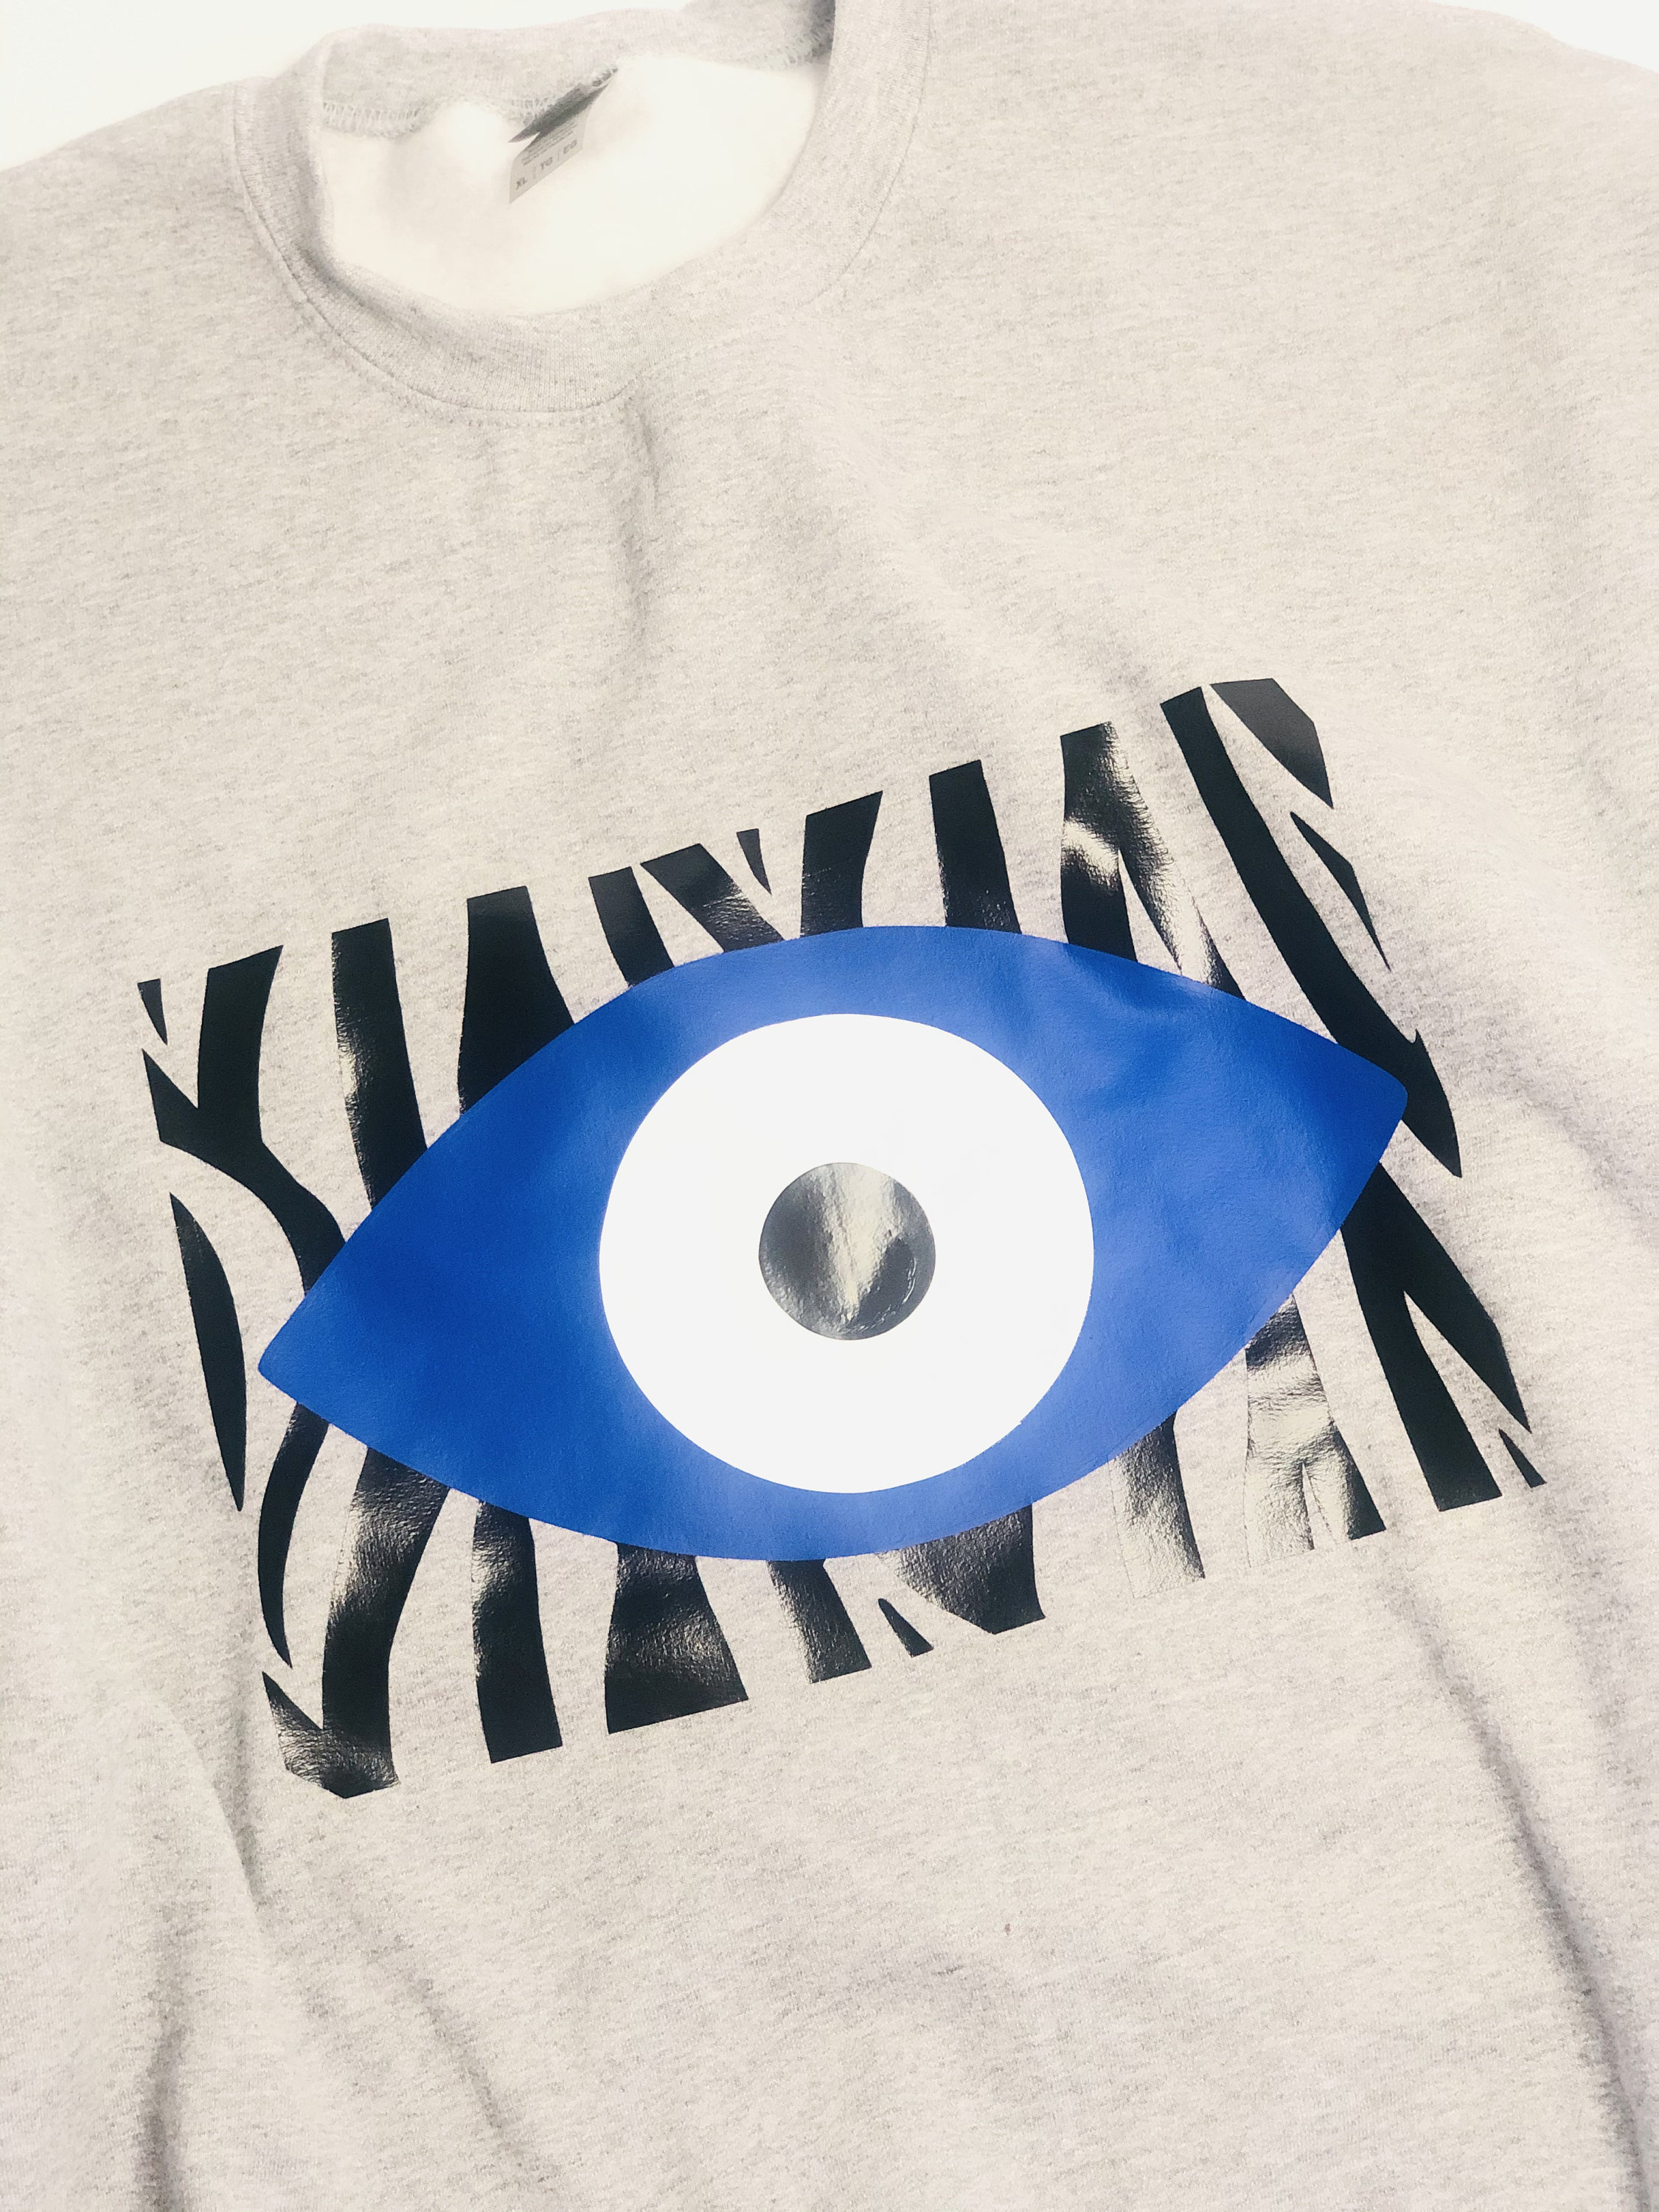 Zebra Sweatshirt With Evil Eye Design Amida By Zaa Crew Neck Adult Sweatshirt Hoodie T-Shirt Custom Made